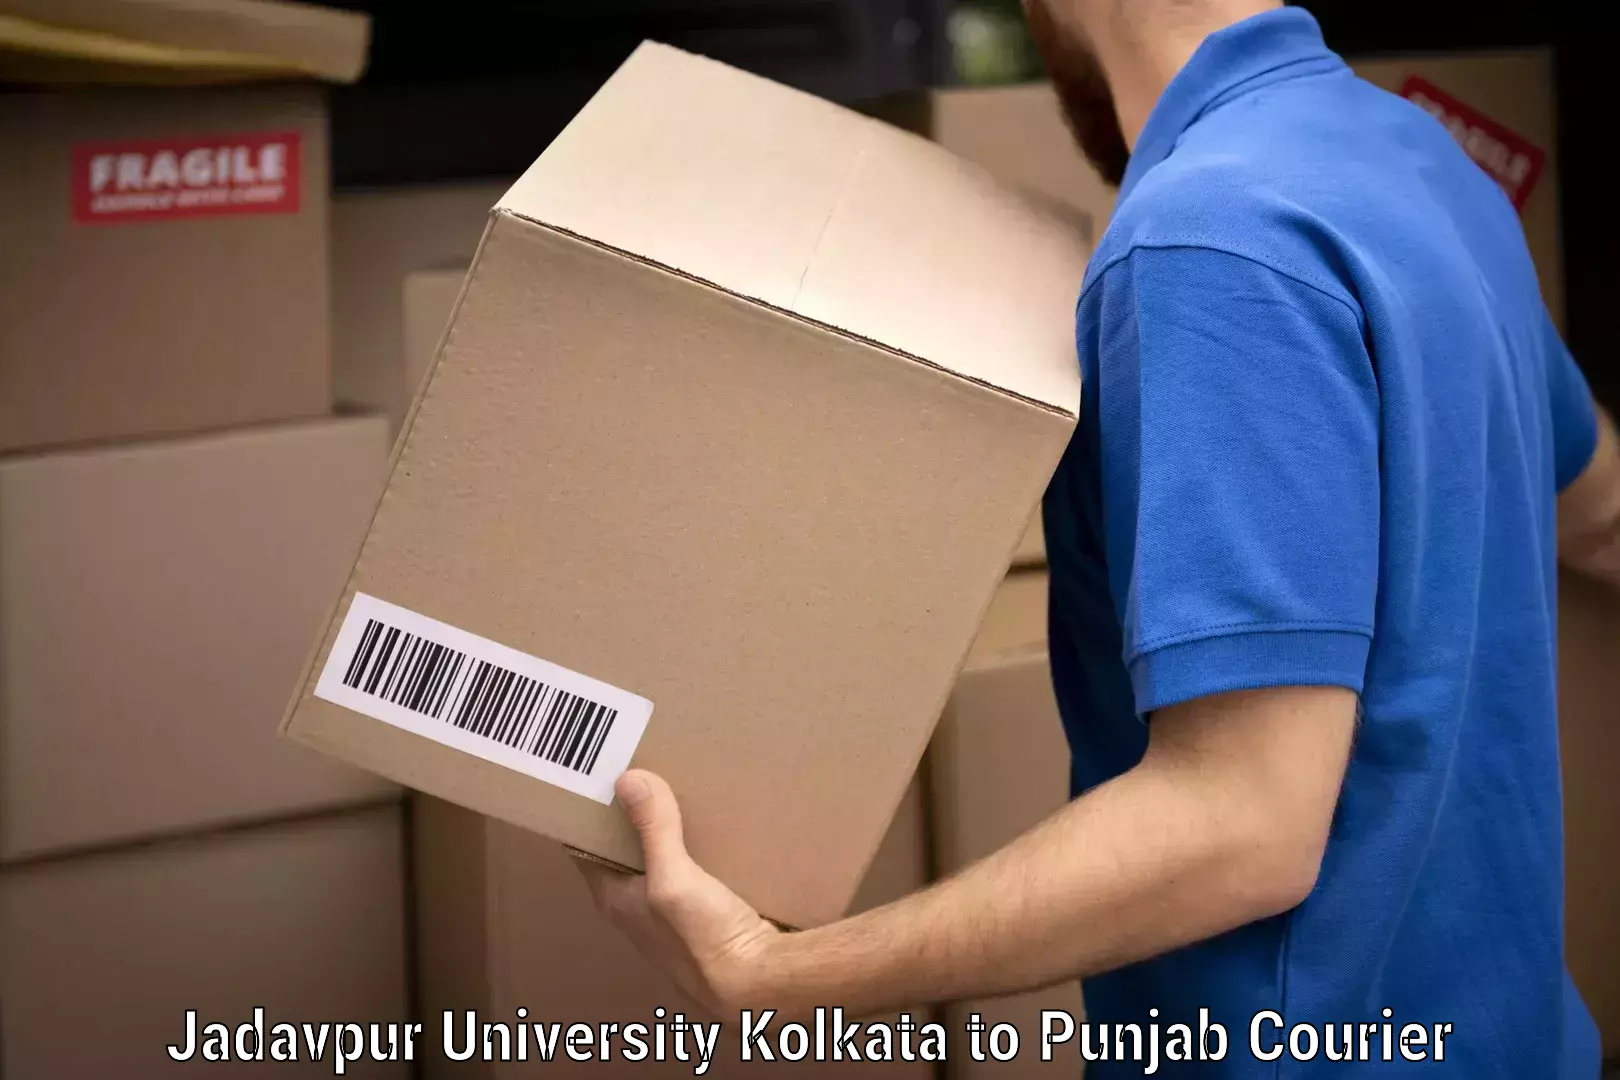 Home shifting experts Jadavpur University Kolkata to Punjab